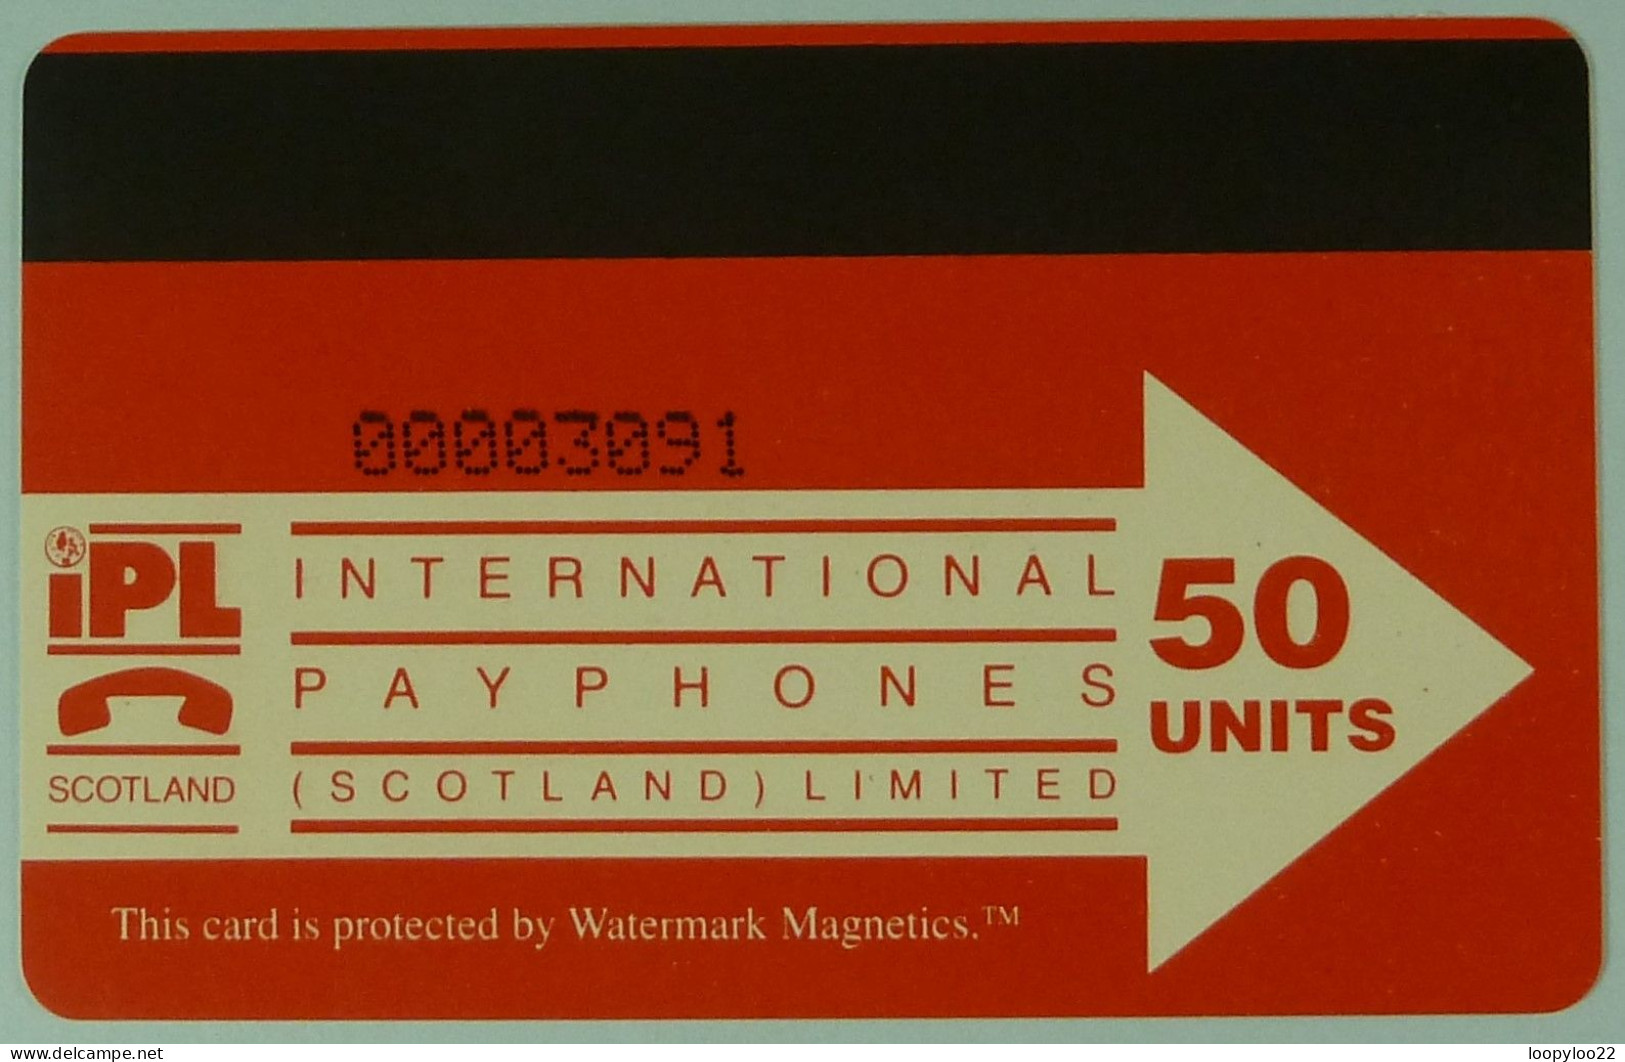 UK - Great Britain - International Payphones Scotland - IPL - Offshore Europe 91 - 50 Units - Eurostar, Cardlink & Railcall